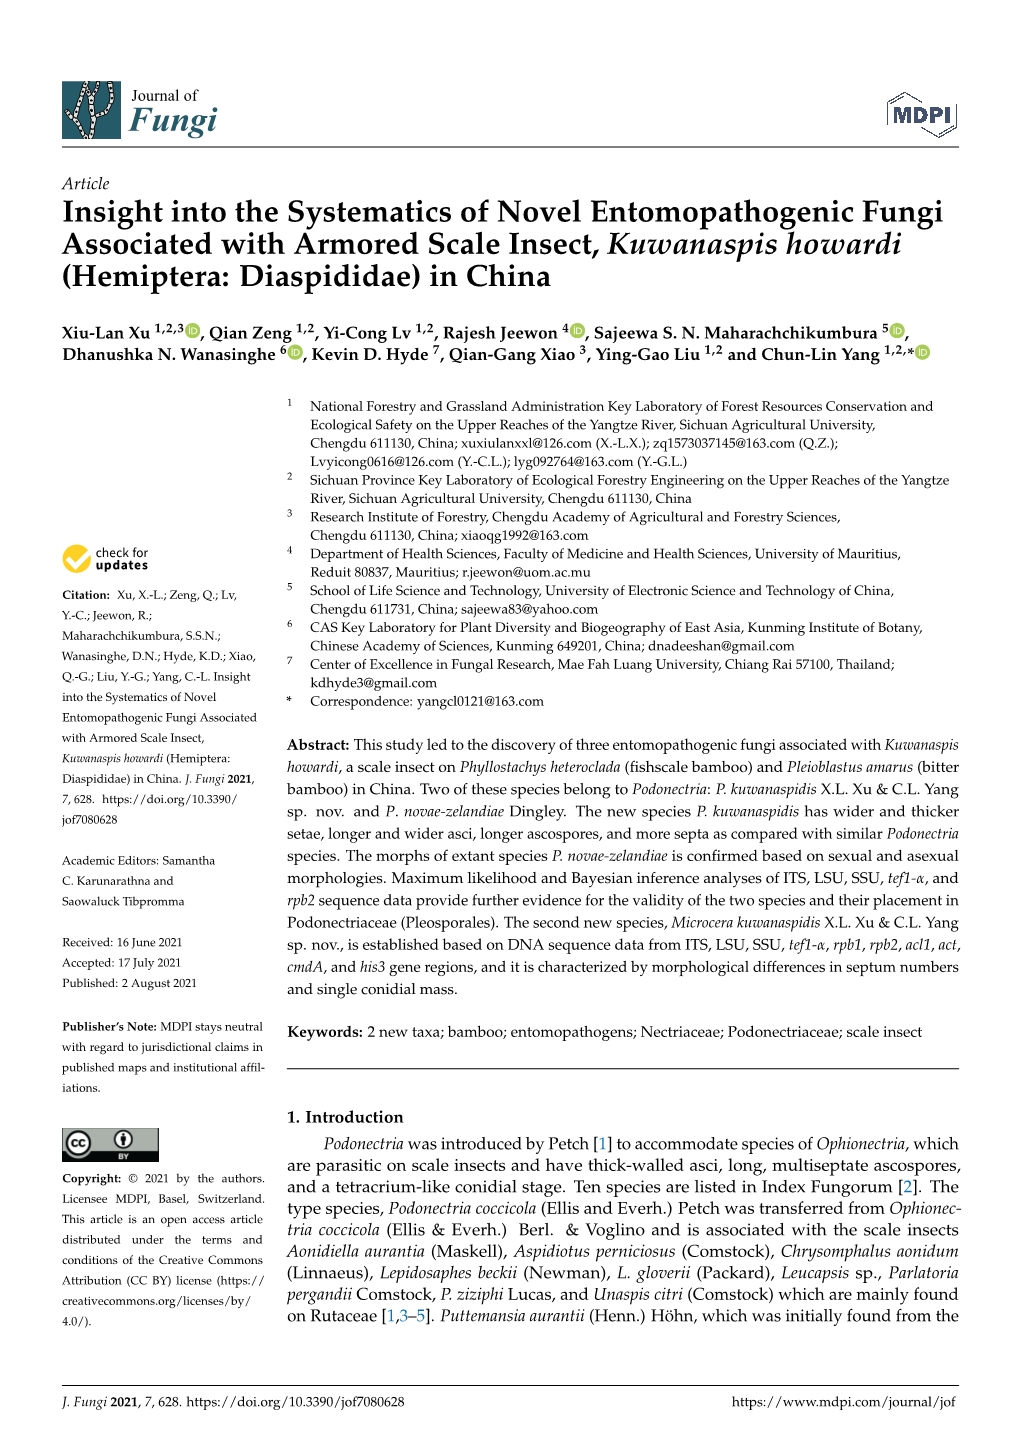 Insight Into the Systematics of Novel Entomopathogenic Fungi Associated with Armored Scale Insect, Kuwanaspis Howardi (Hemiptera: Diaspididae) in China